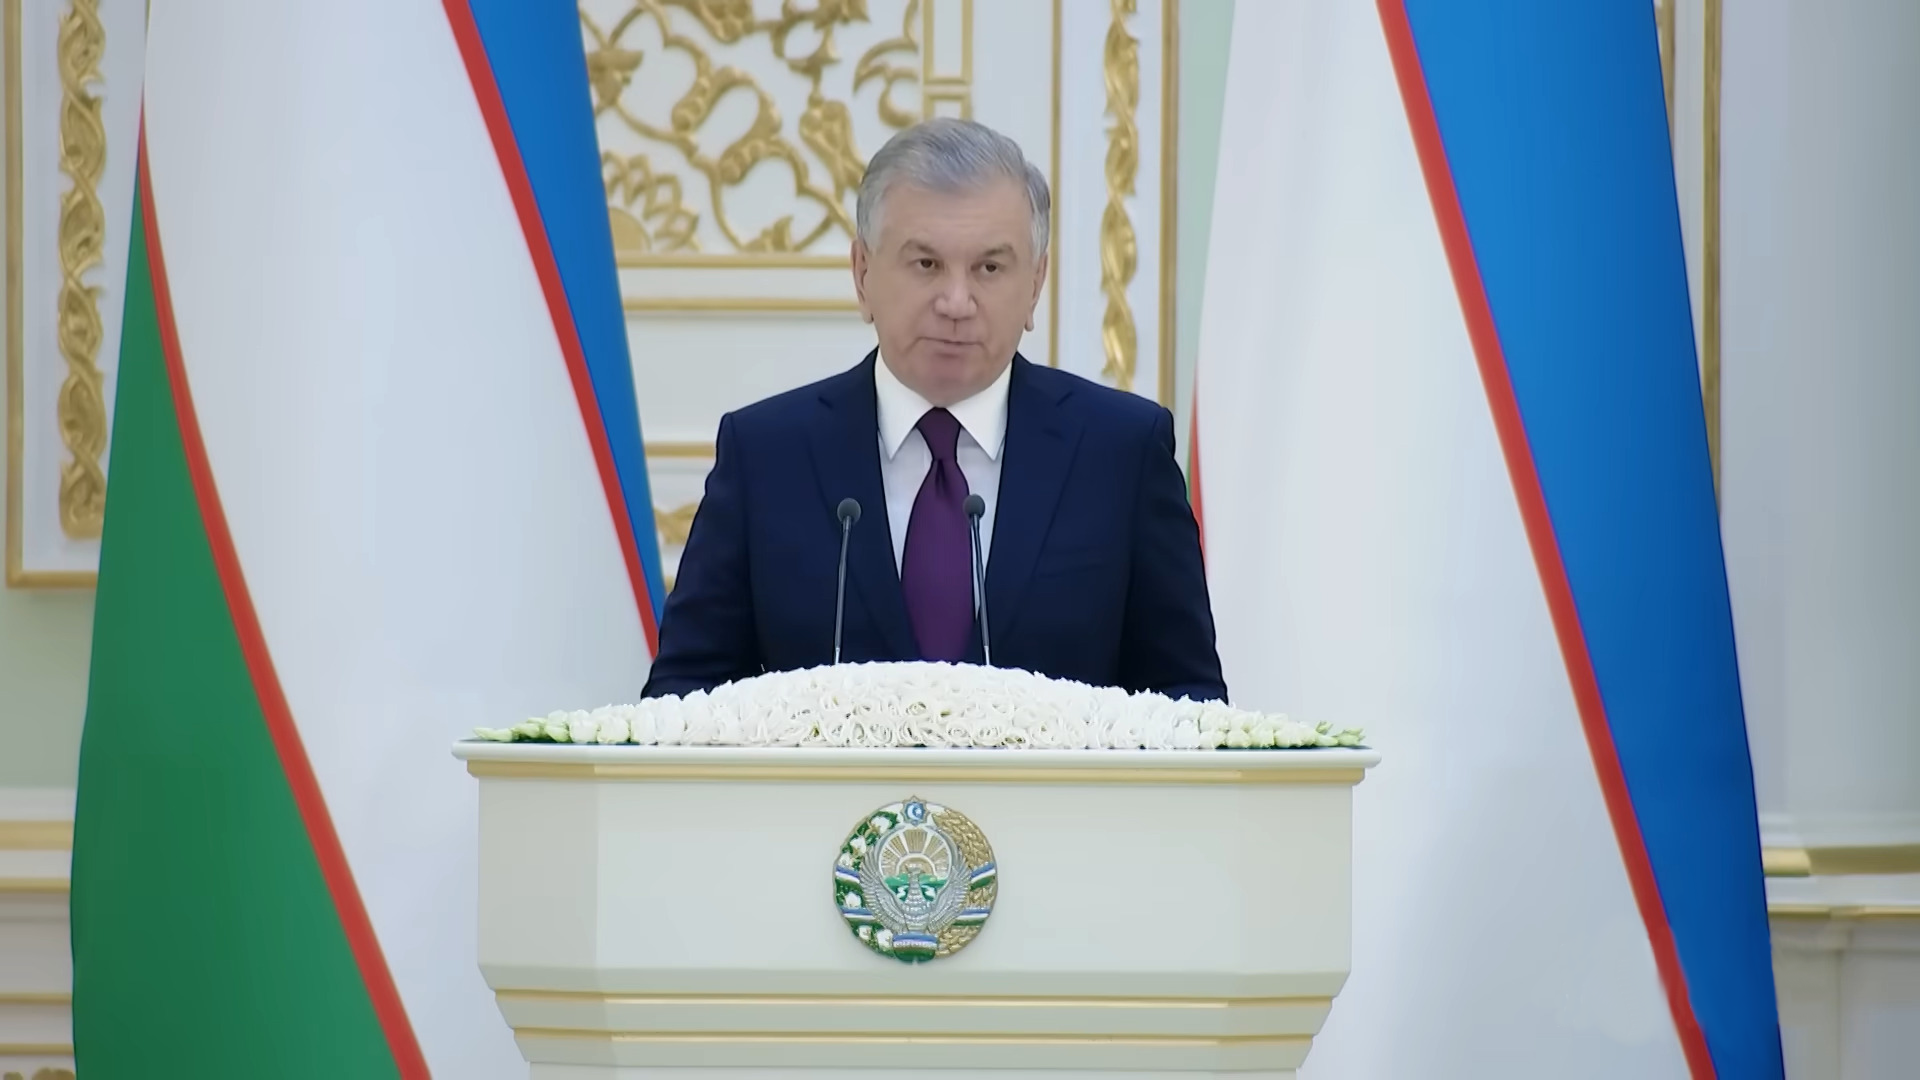 Shavkat Mirziyoyev and his support for business in Uzbekistan